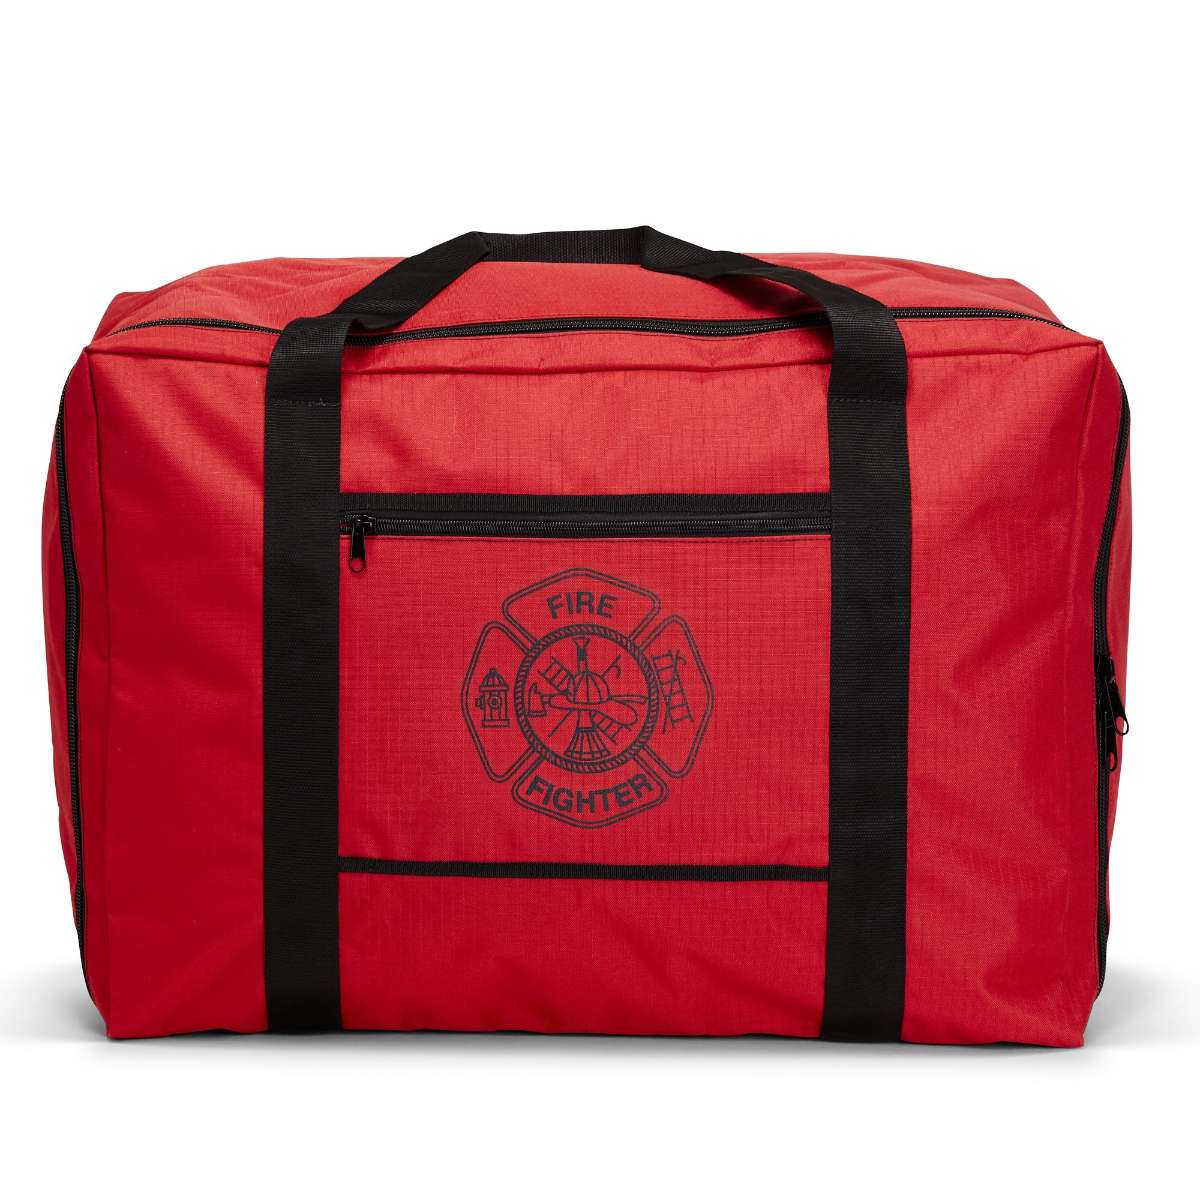 Line2Design Firefighter Gear Bag